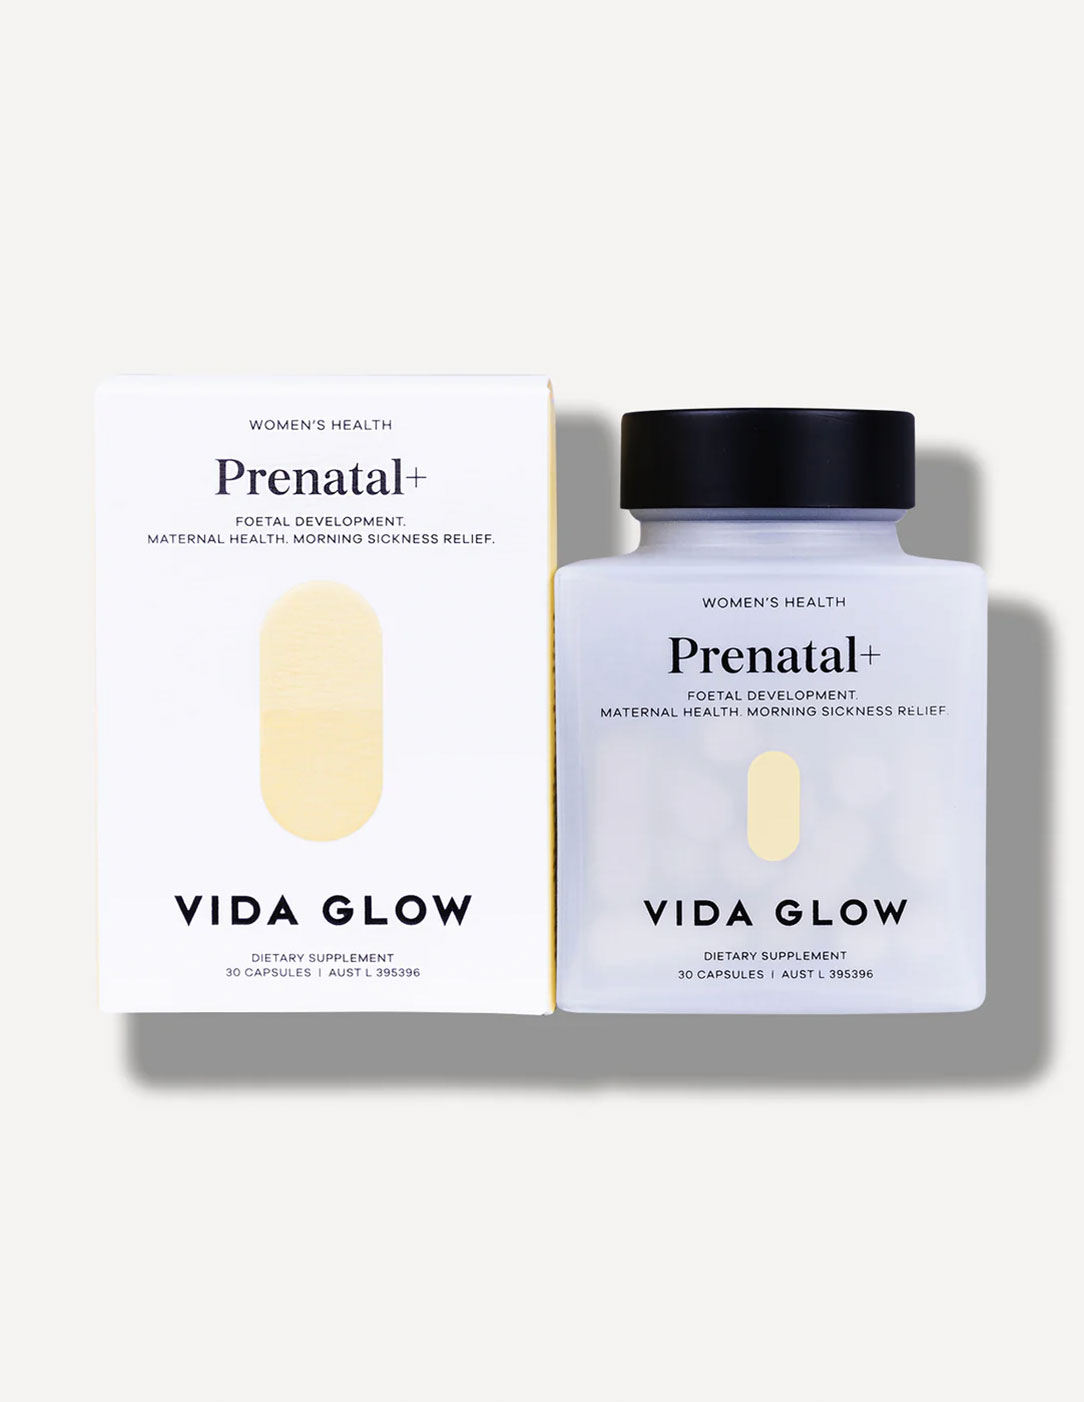 Vida Glow’s Prenatal+ supplement support preconception and pregnancy health